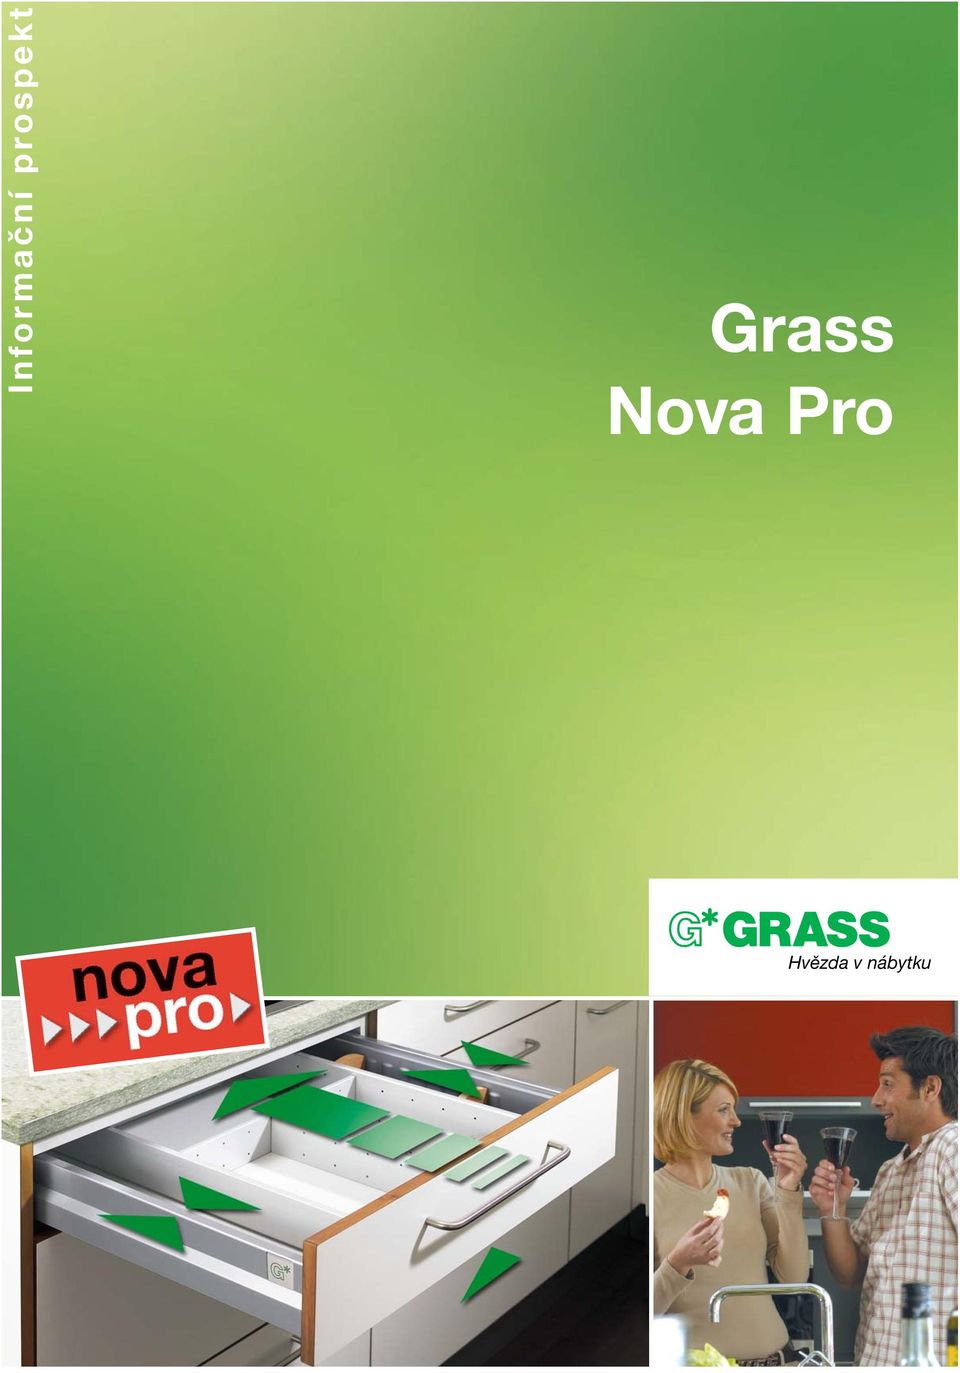 Grass Nova